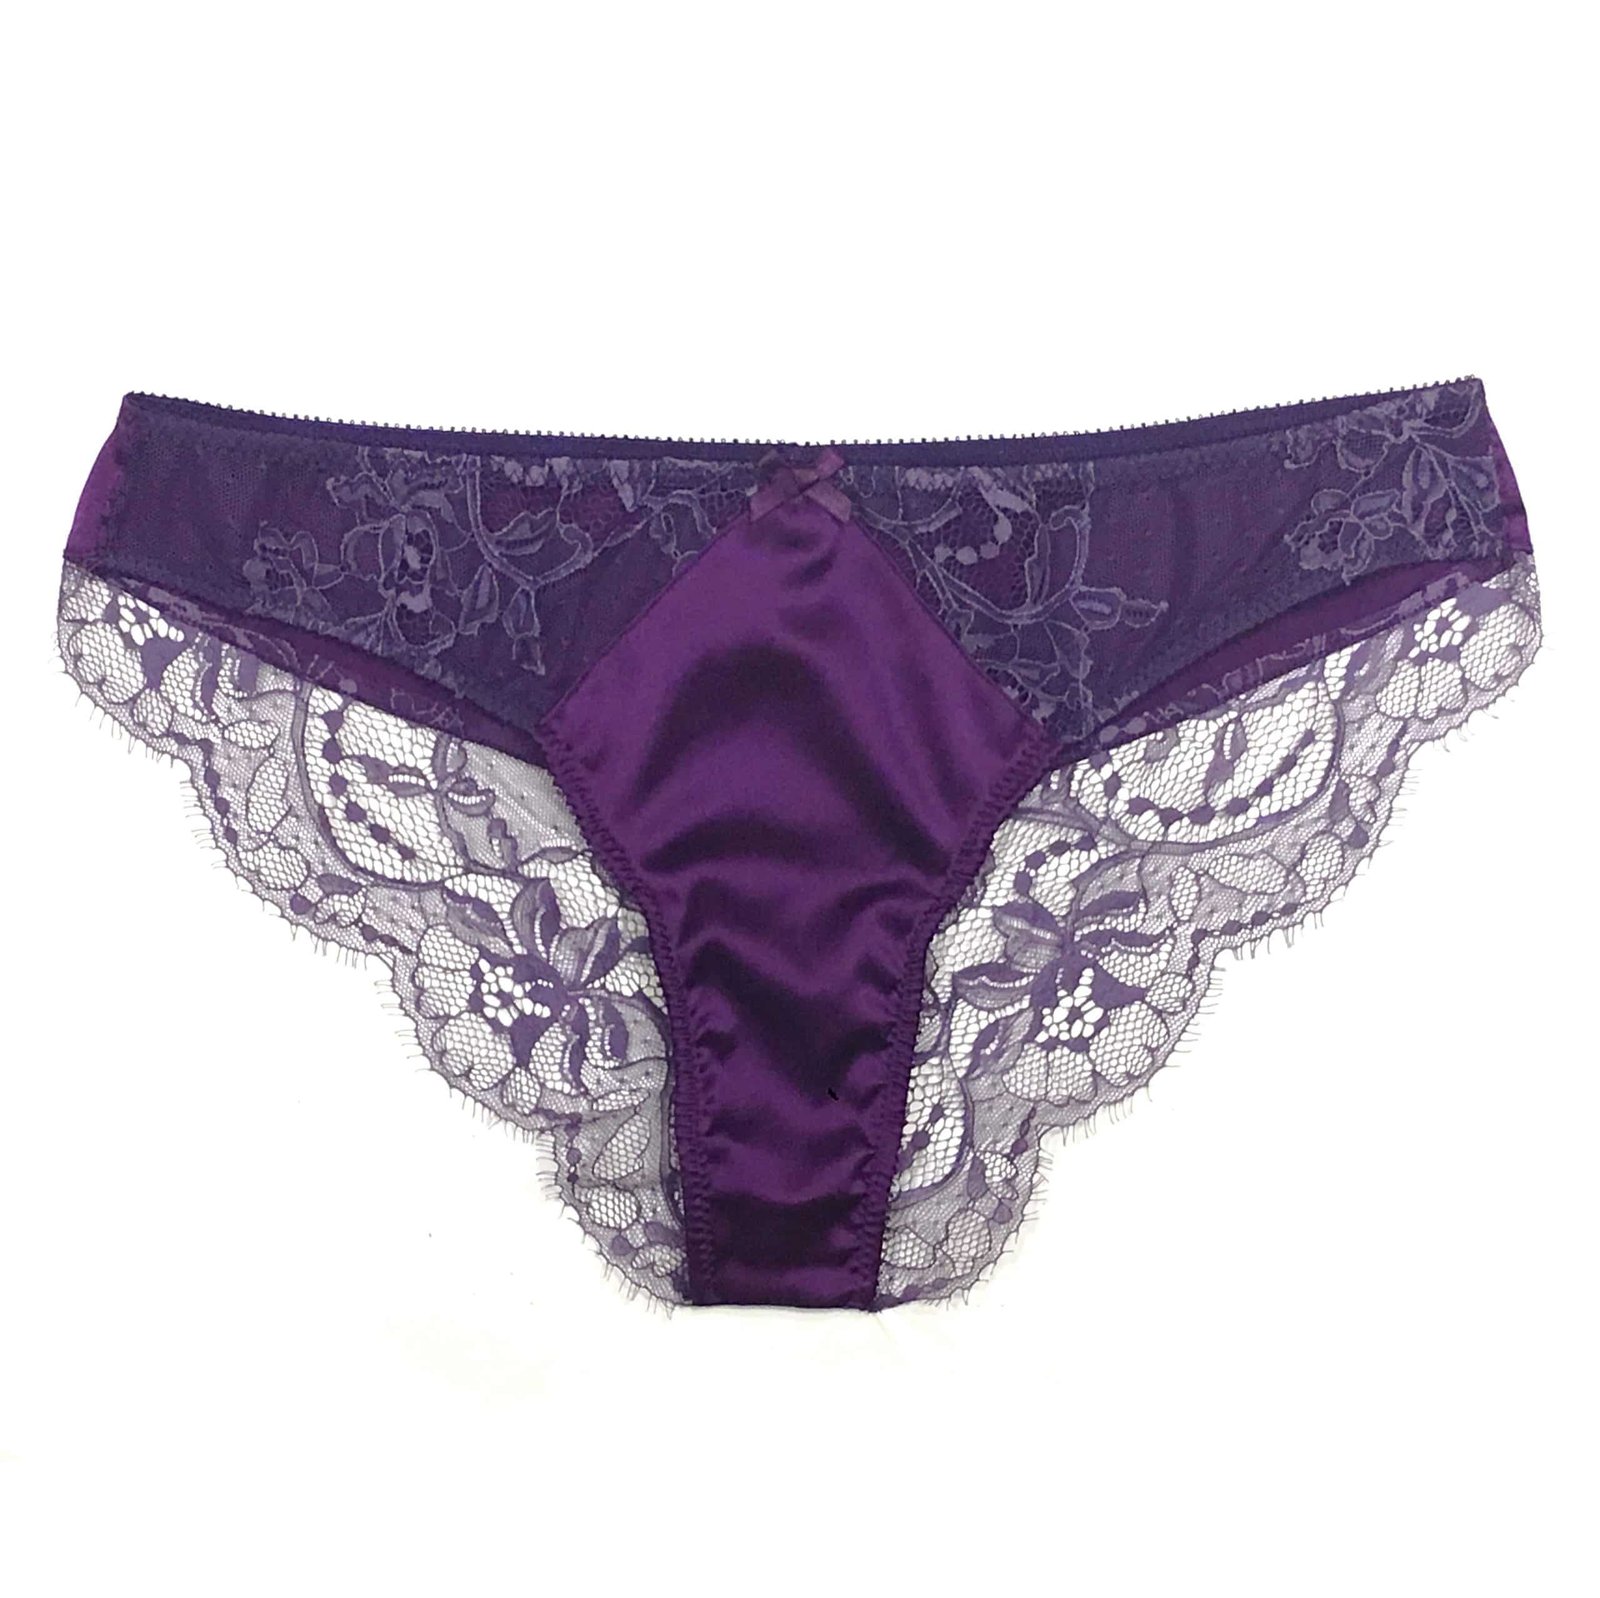 Elegant lace panties stock photo. Image of clothing, purple - 92868742